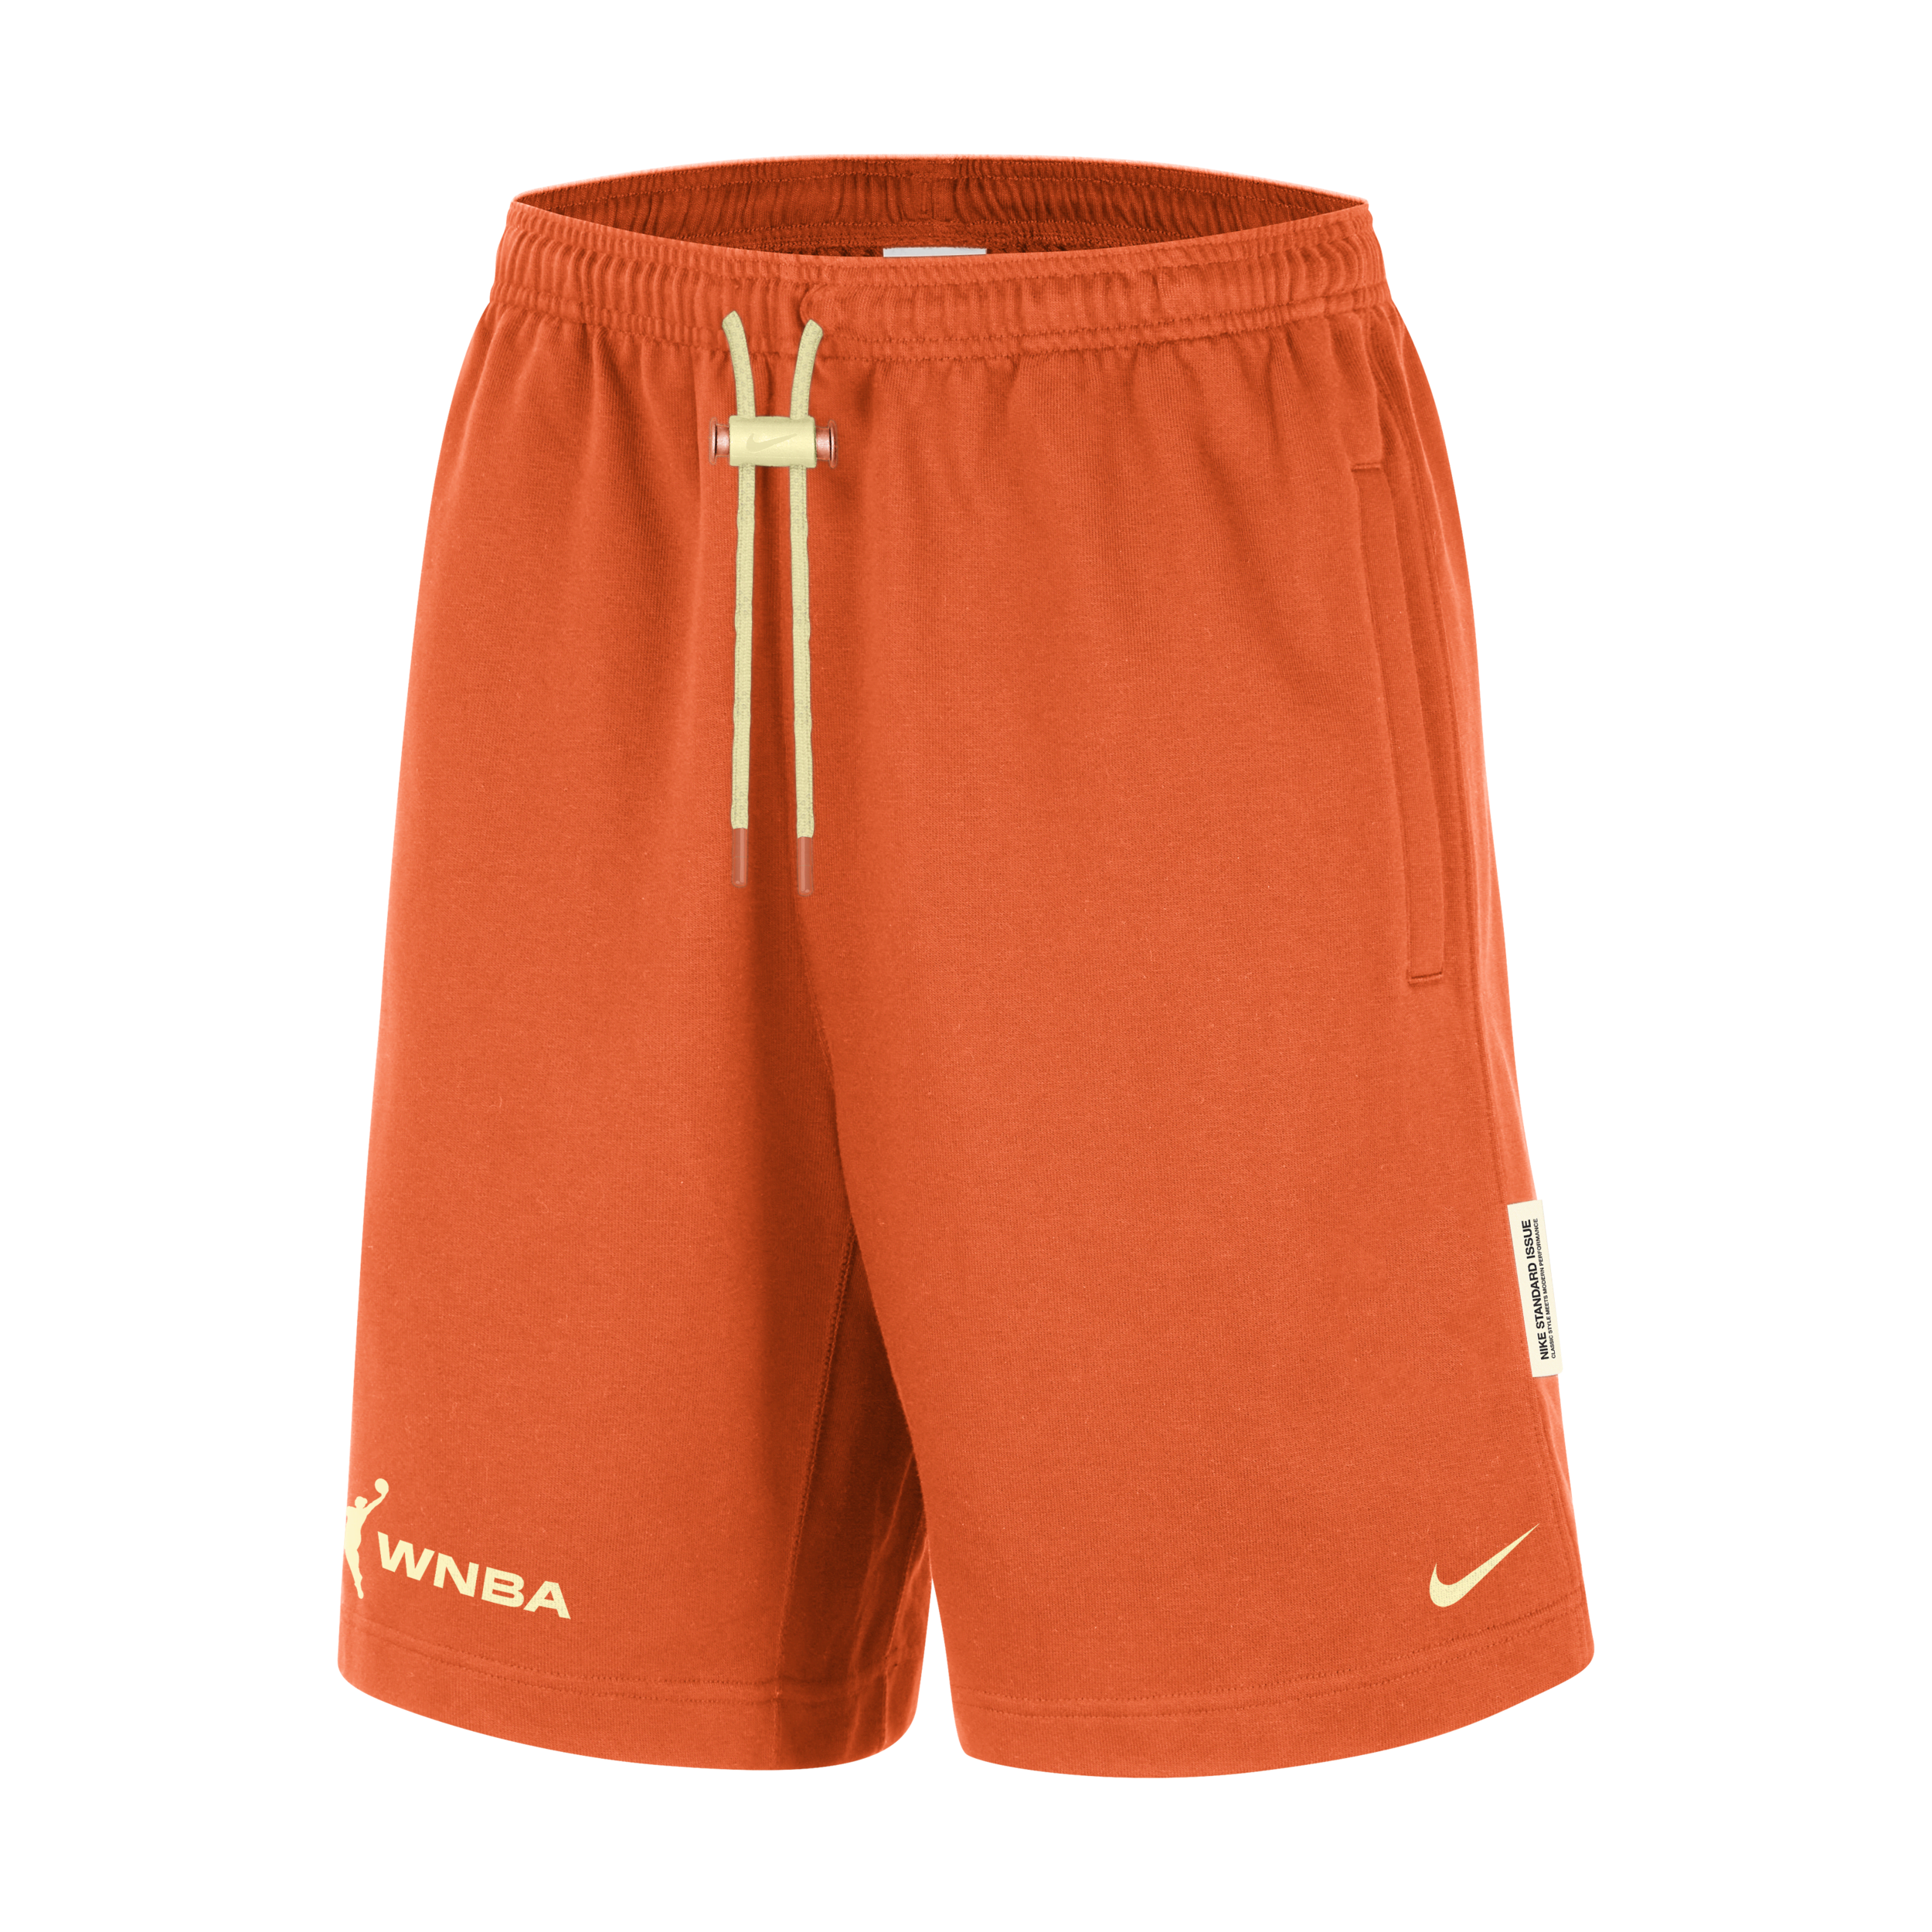 Nike Wnba Standard Issue  Men's Basketball Shorts In Orange